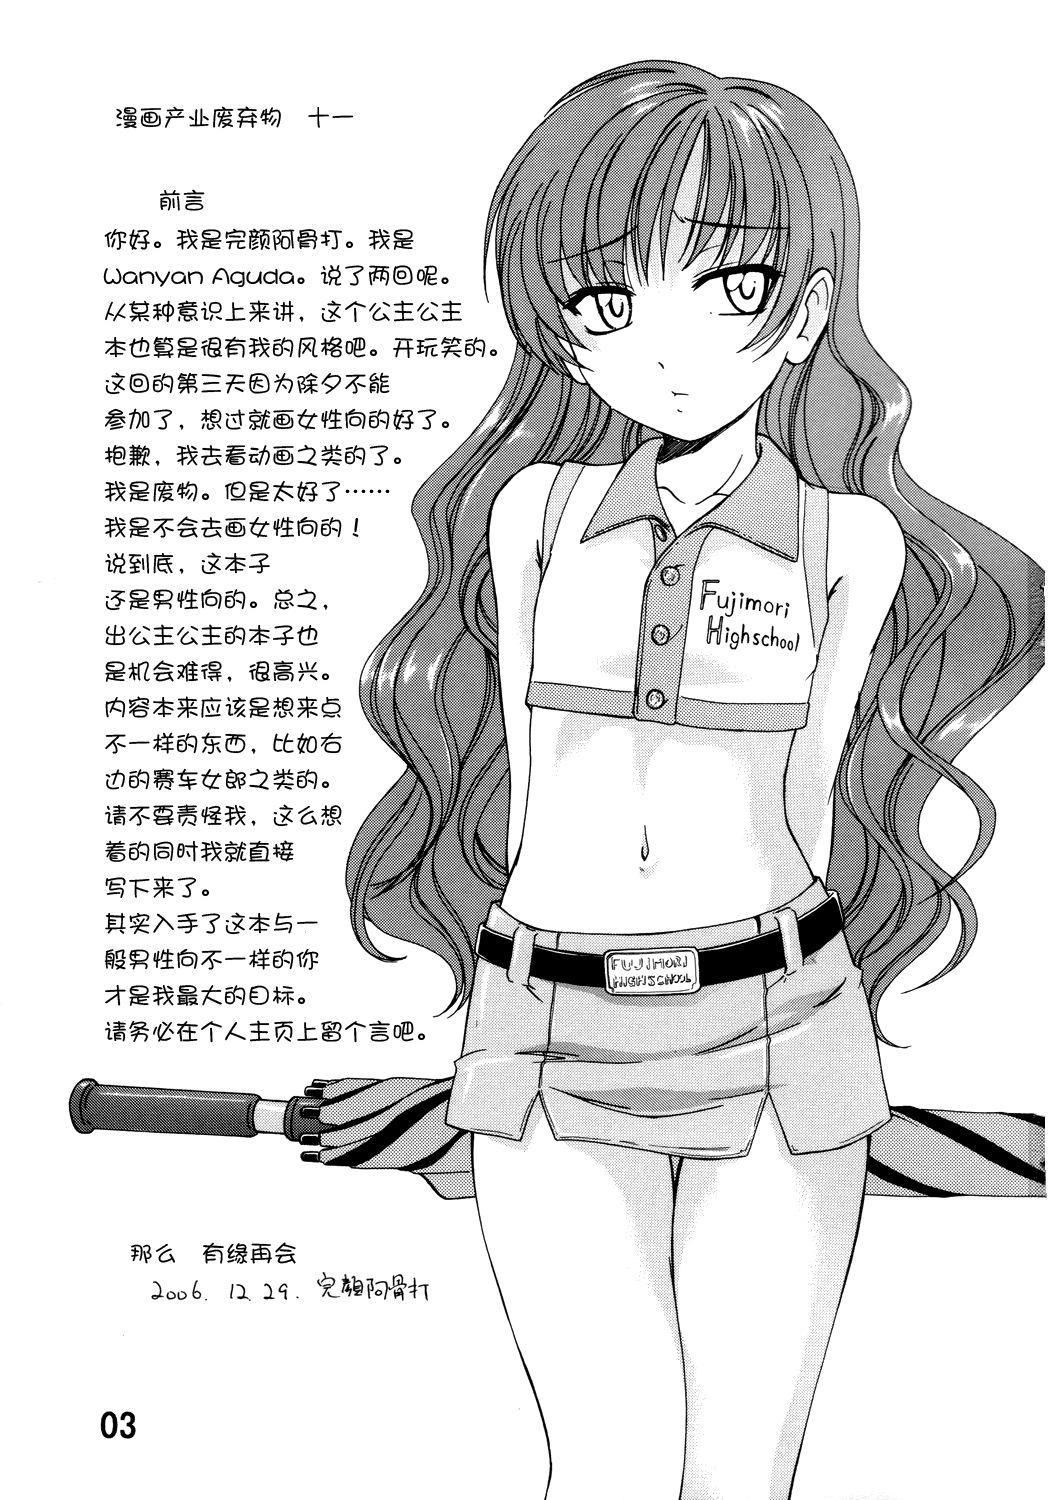 Sensual Manga Sangyou Haikibutsu 11 - Comic Industrial Wastes 11 - Princess princess Femdom Pov - Page 2